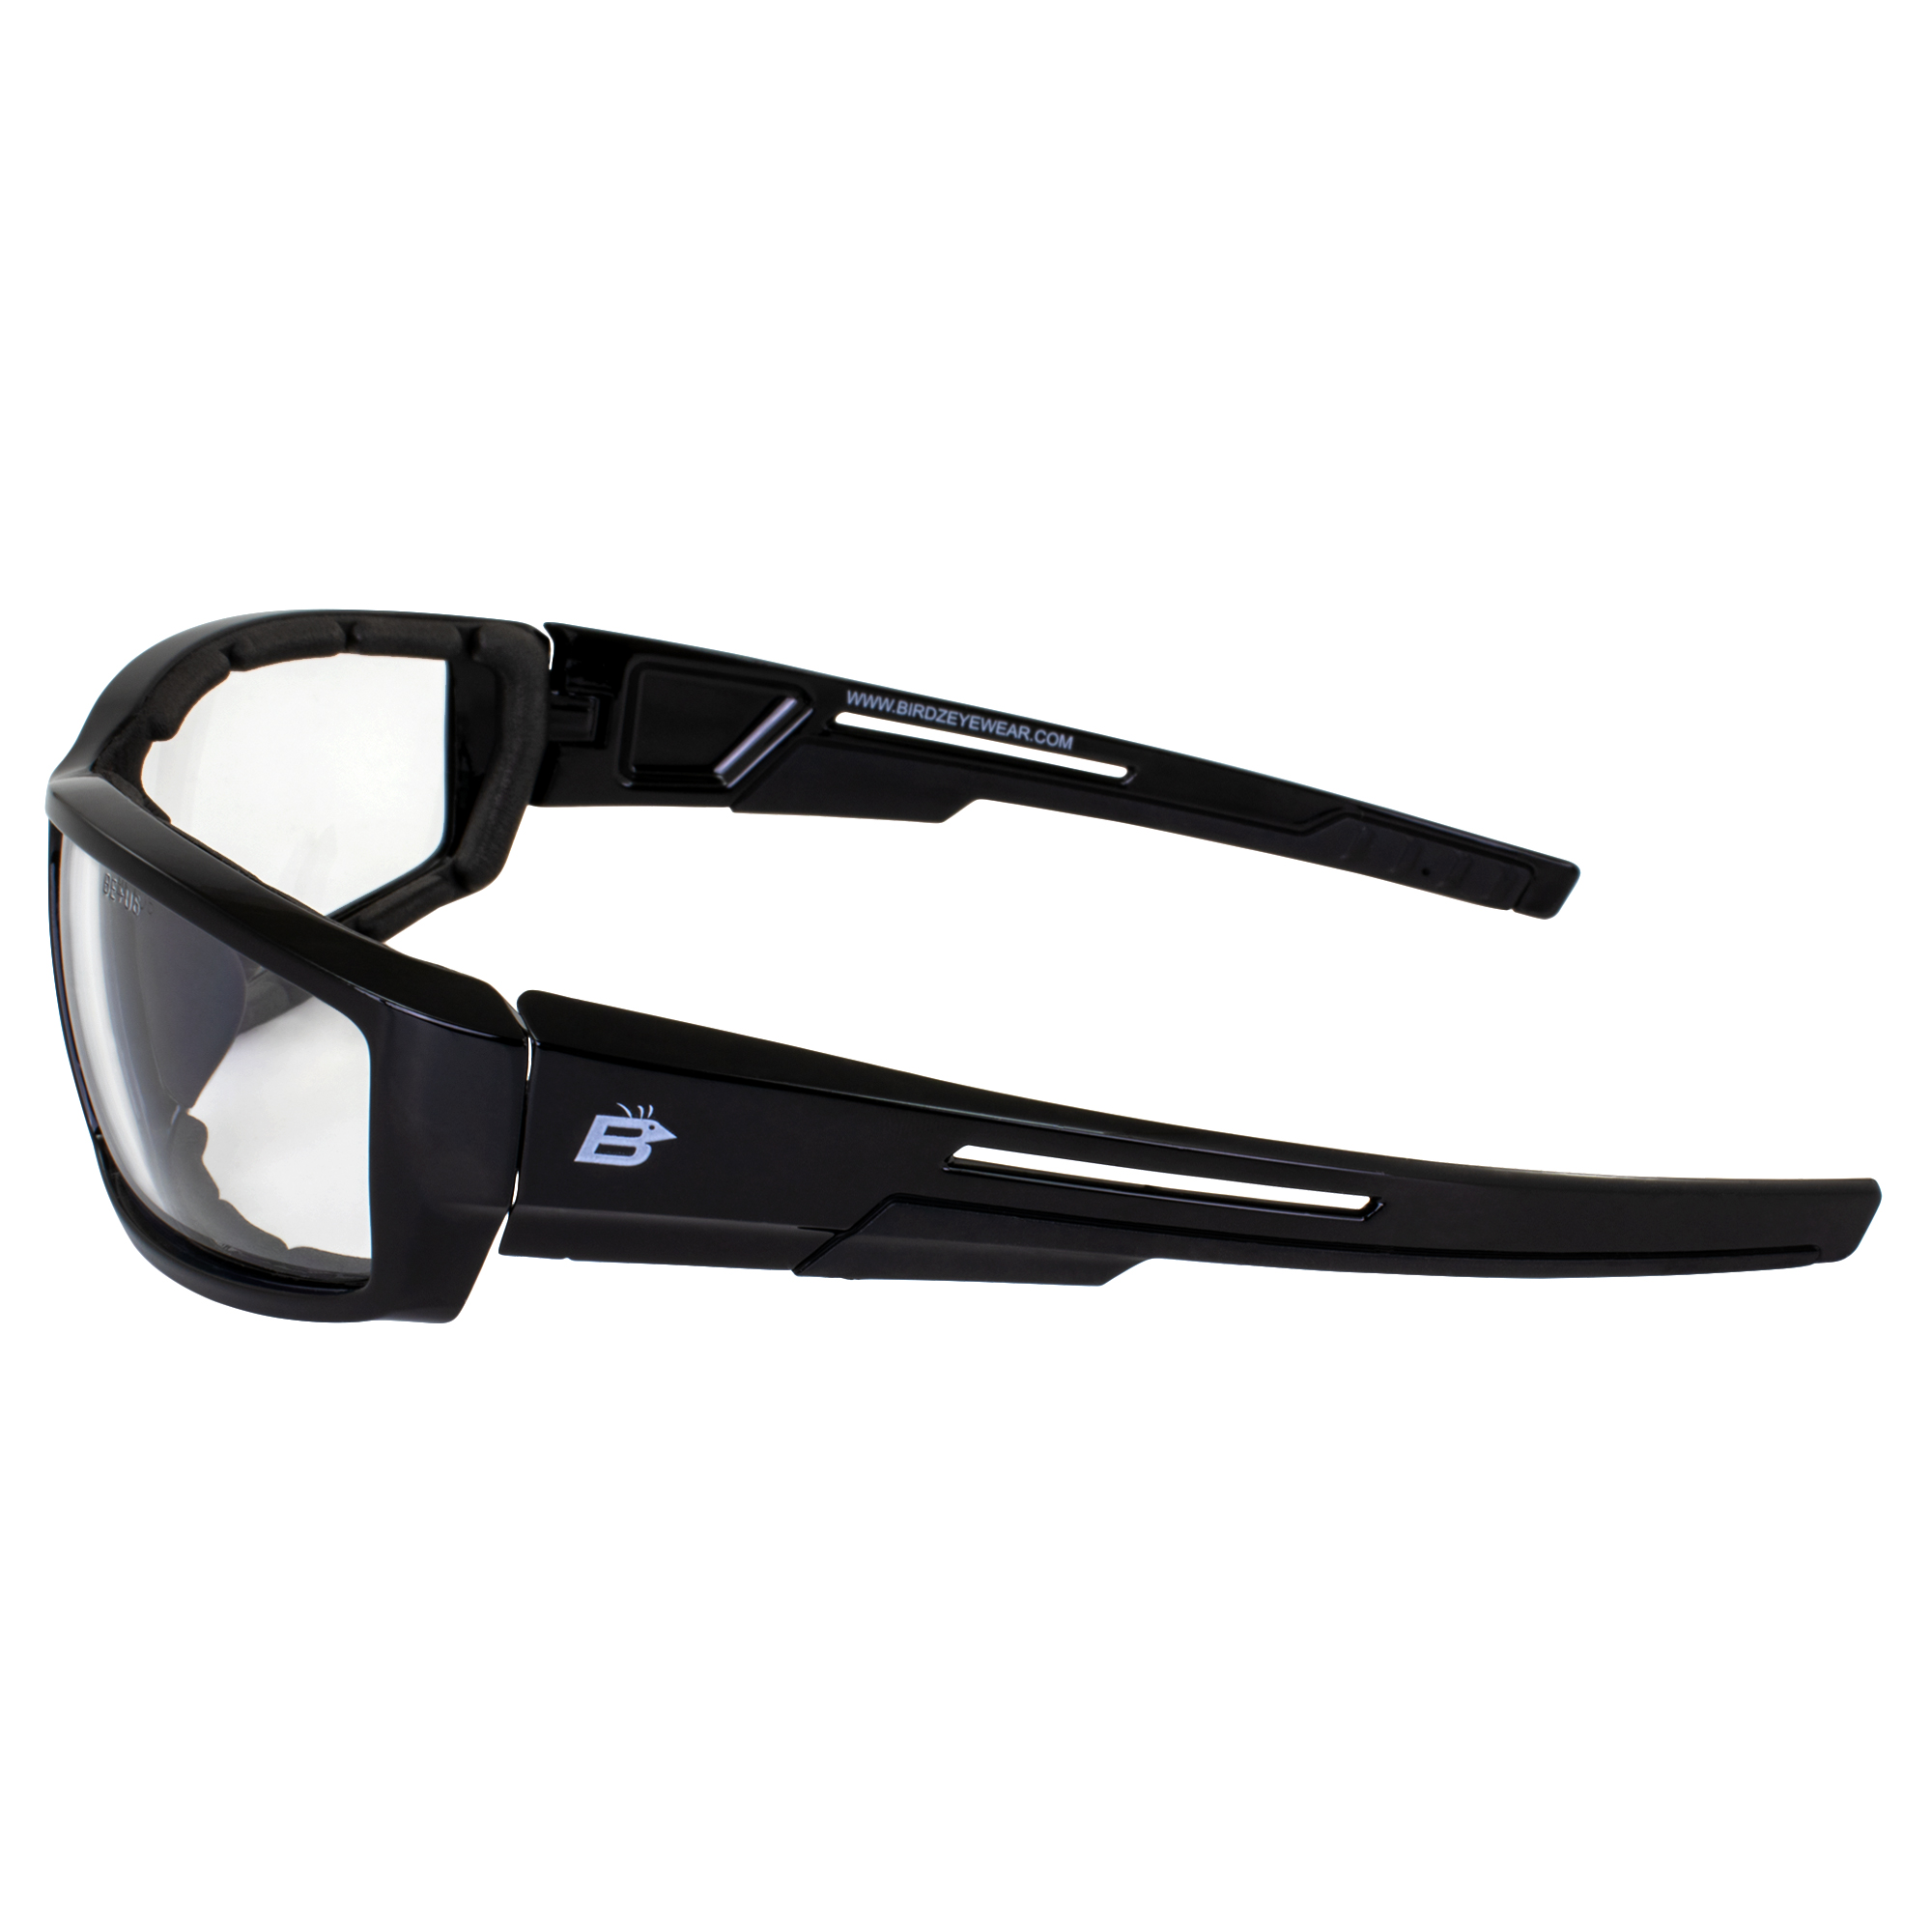 Birdz Eyewear Swoop Anti-Fog Padded Motorcycle Riding Sunglasses Black Frame Lenses for Day & Night ANSI Z87 .1 - image 4 of 7